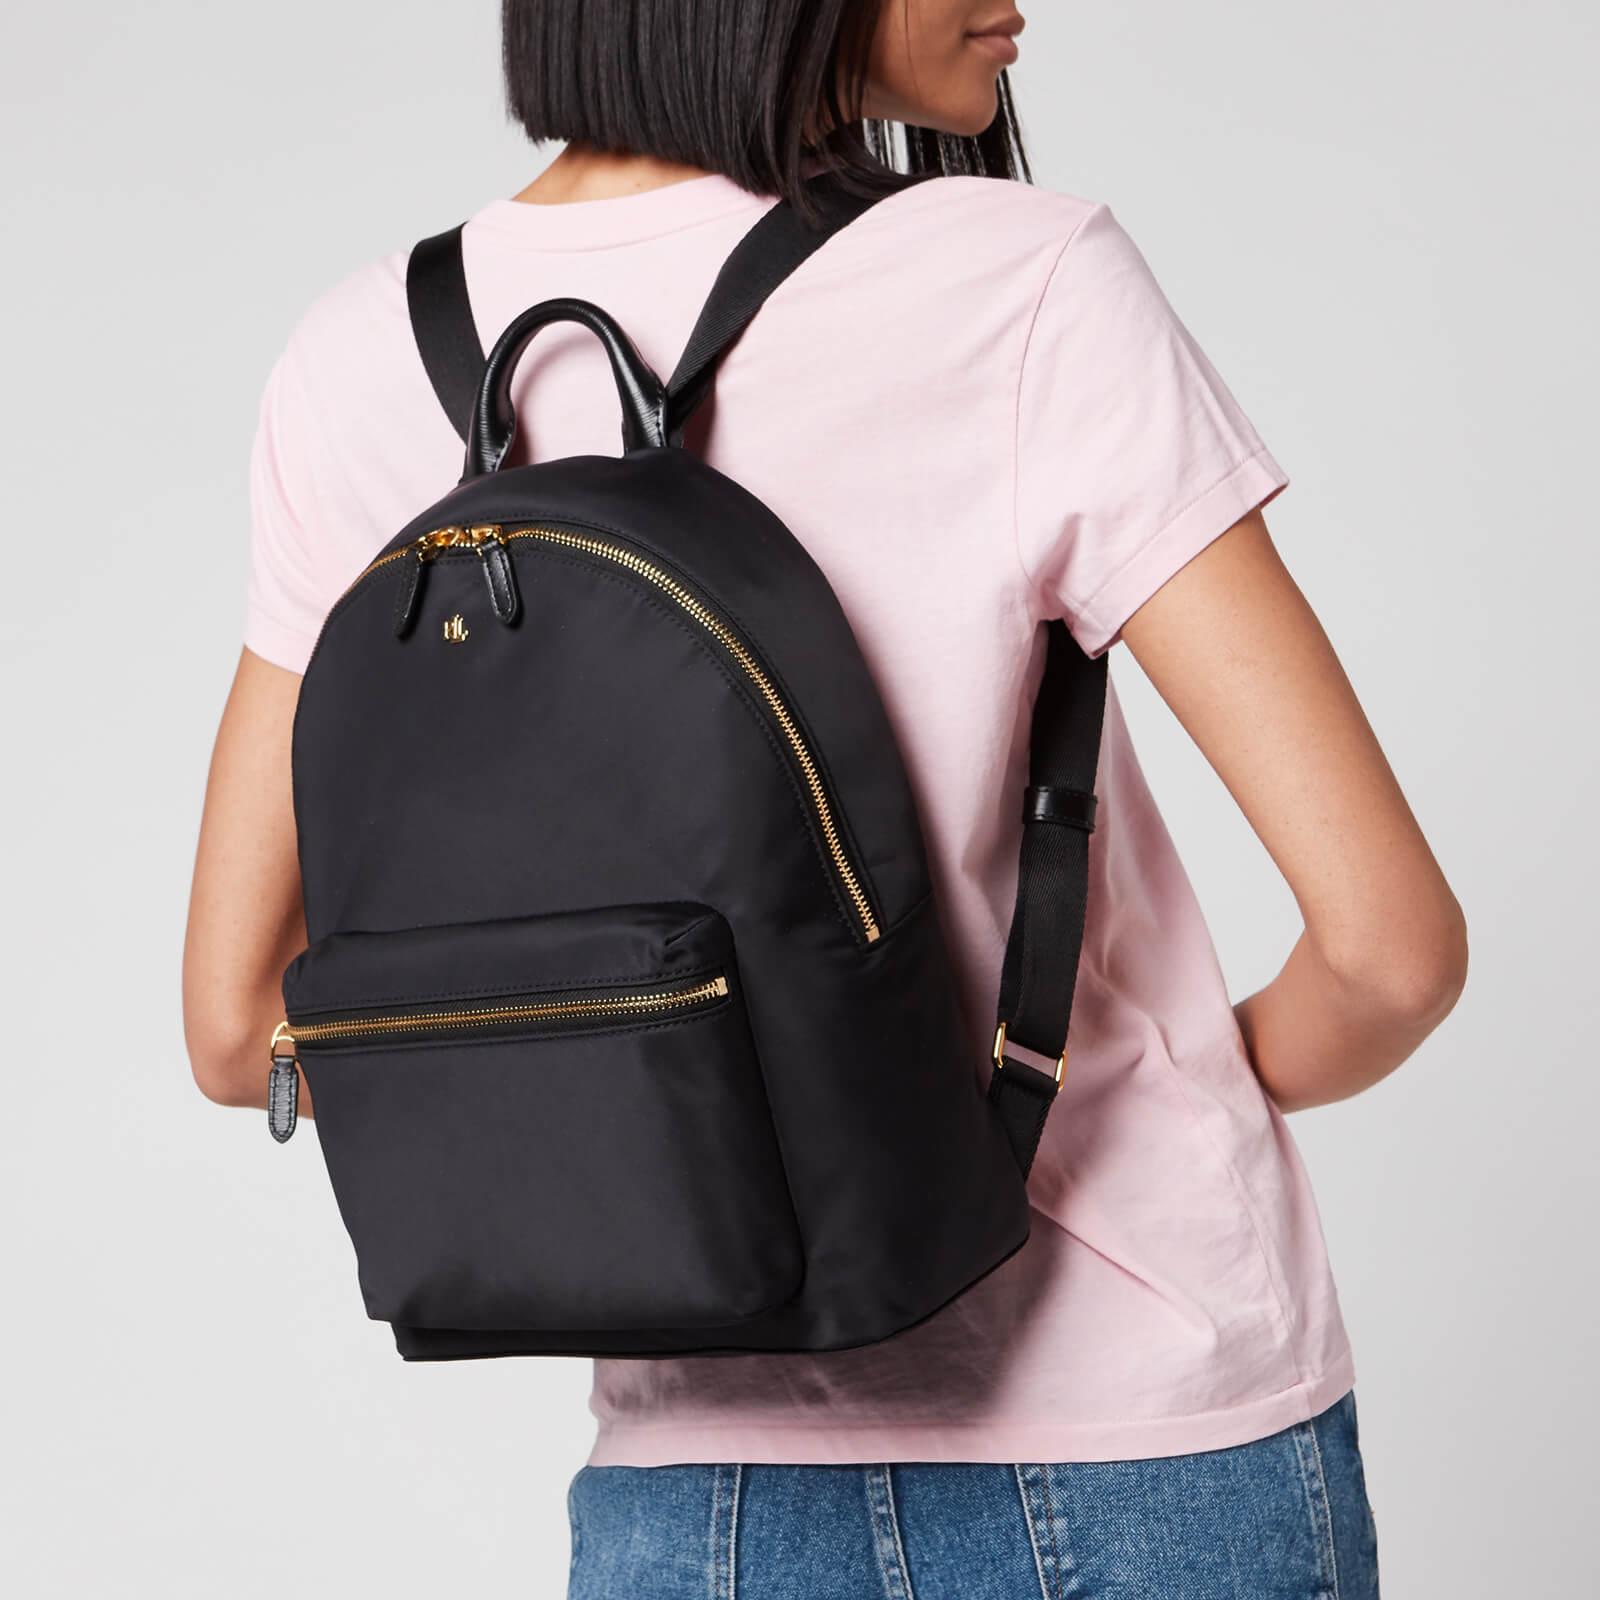 Izzie Convertible Backpack